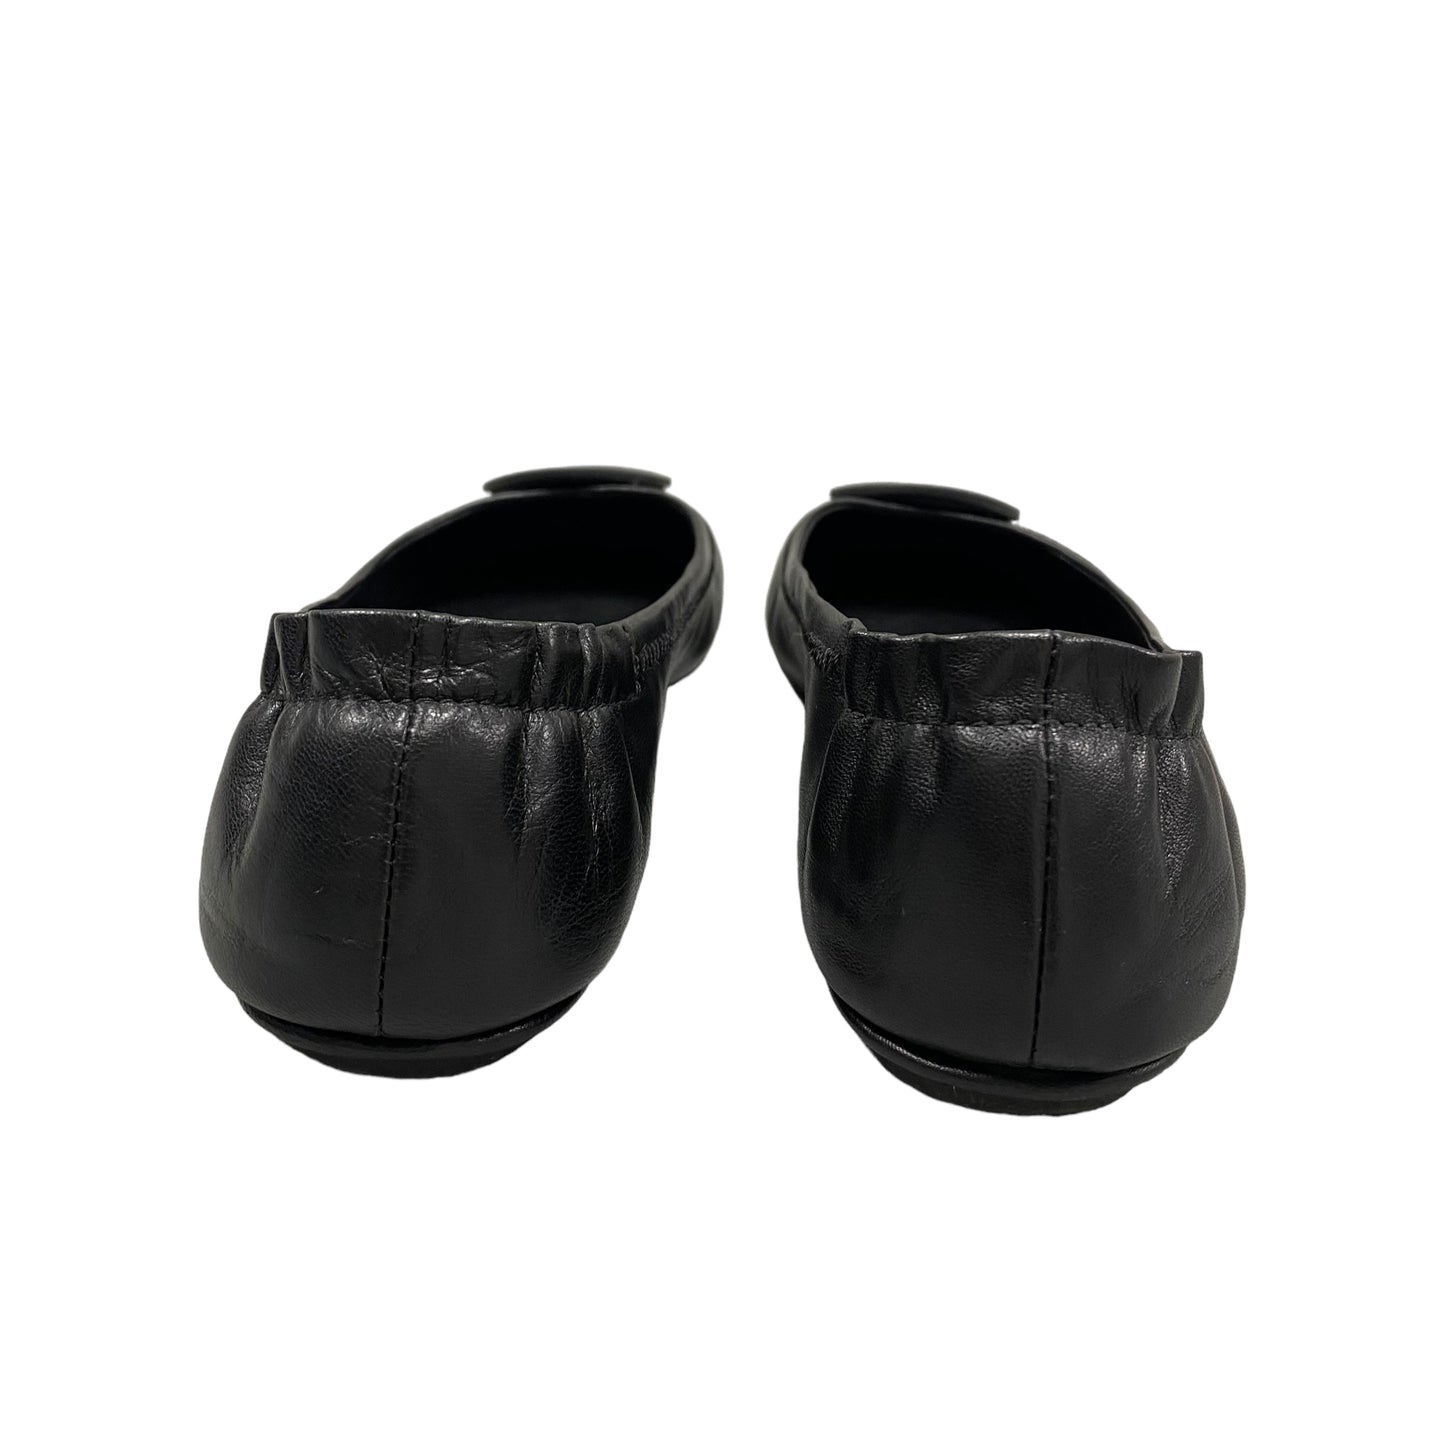 Black Shoes Designer Tory Burch, Size 6.5